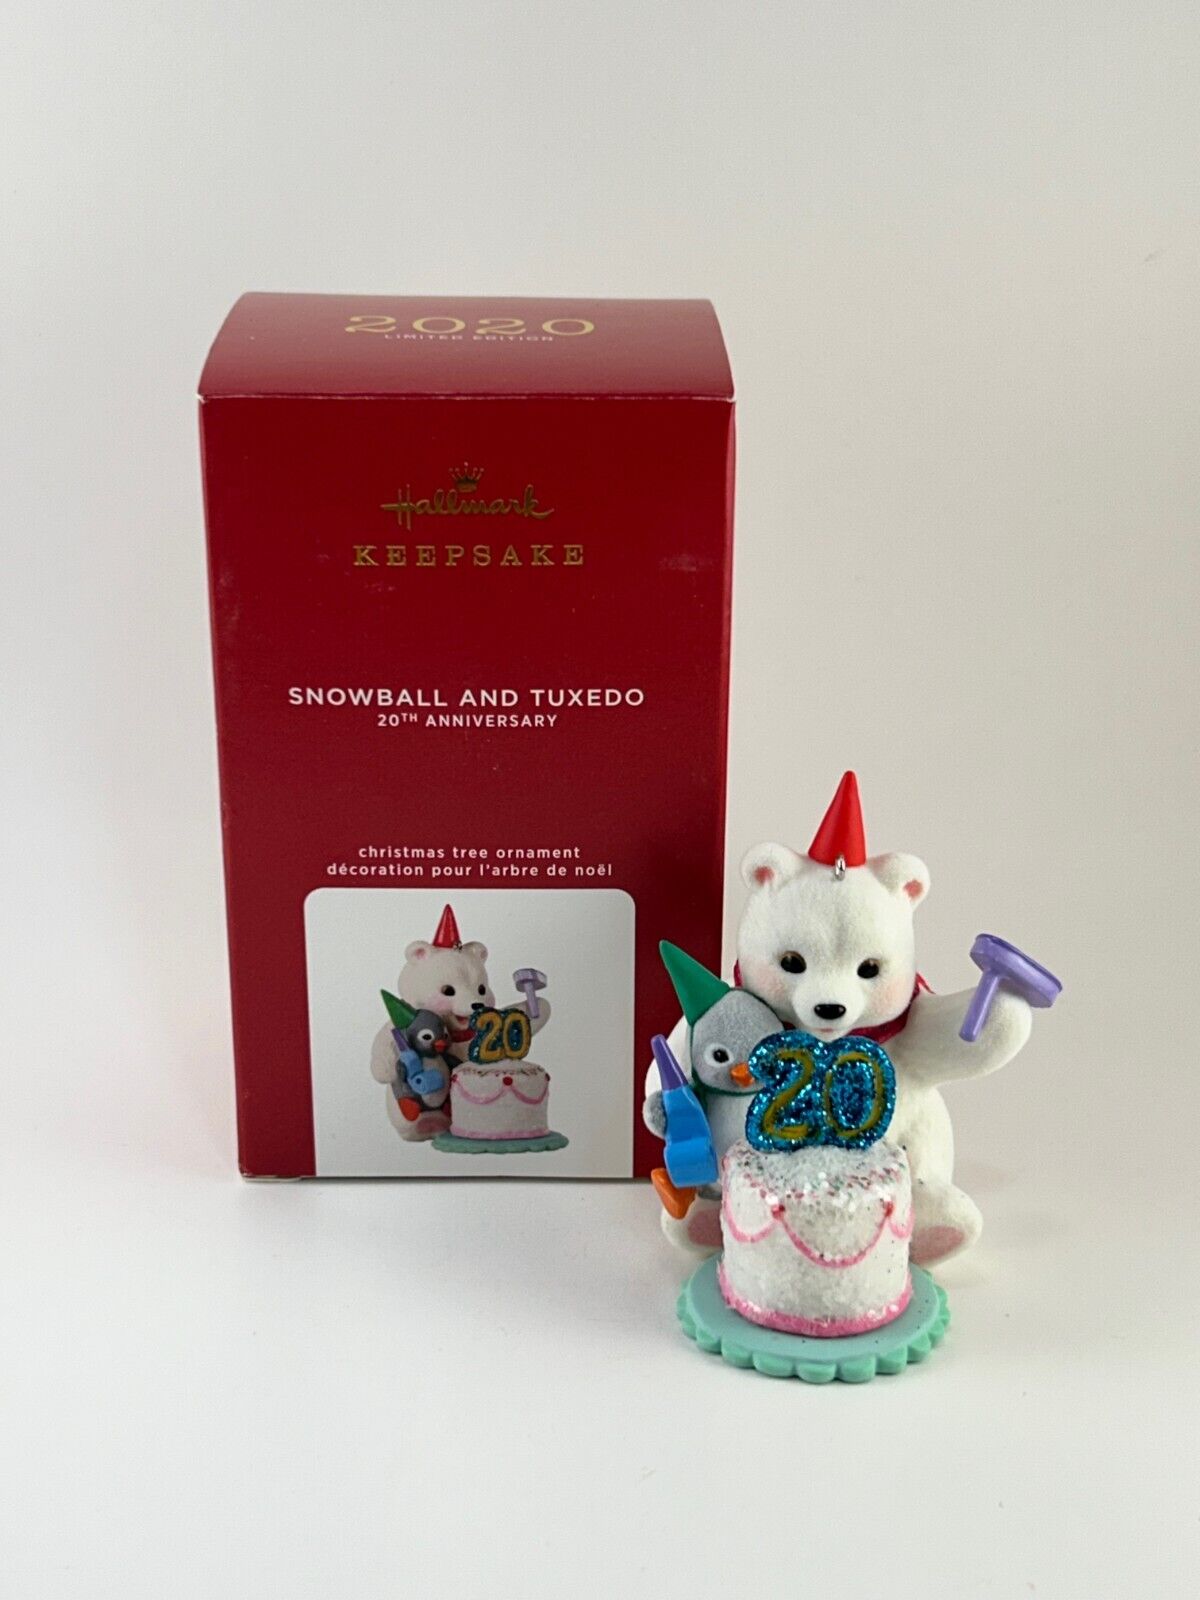 Snowball and Tuxedo 20th Anniversary - 2020 Hallmark Ornament - Limited Edition